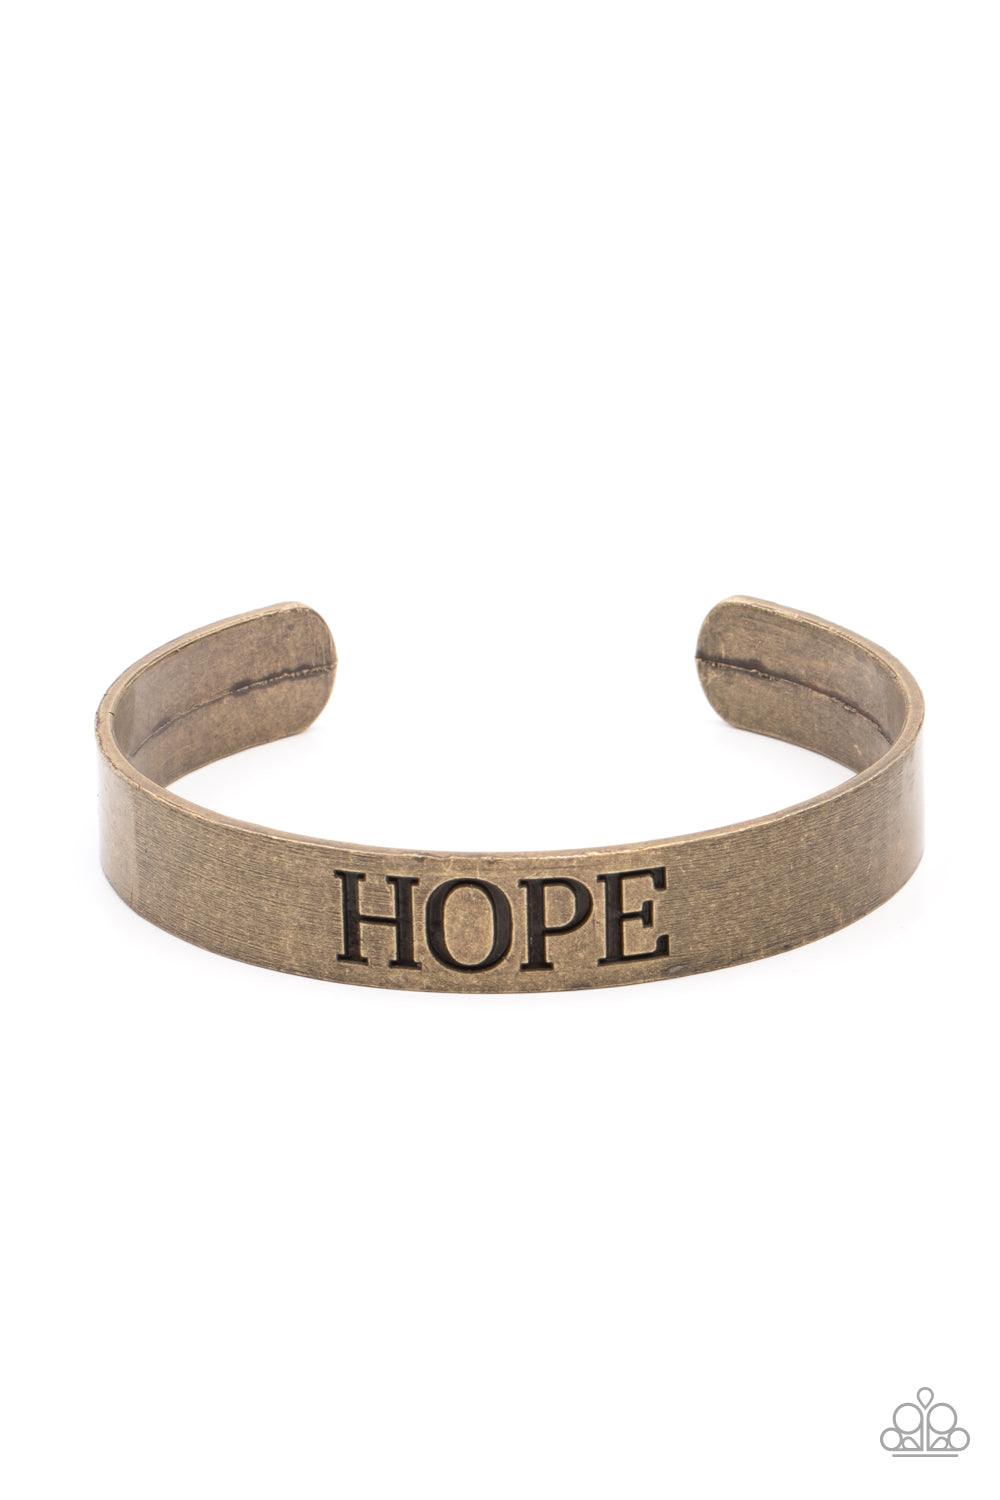 Paparazzi Accessories - Hope Makes The World Go Round #B574 - Brass Bracelet